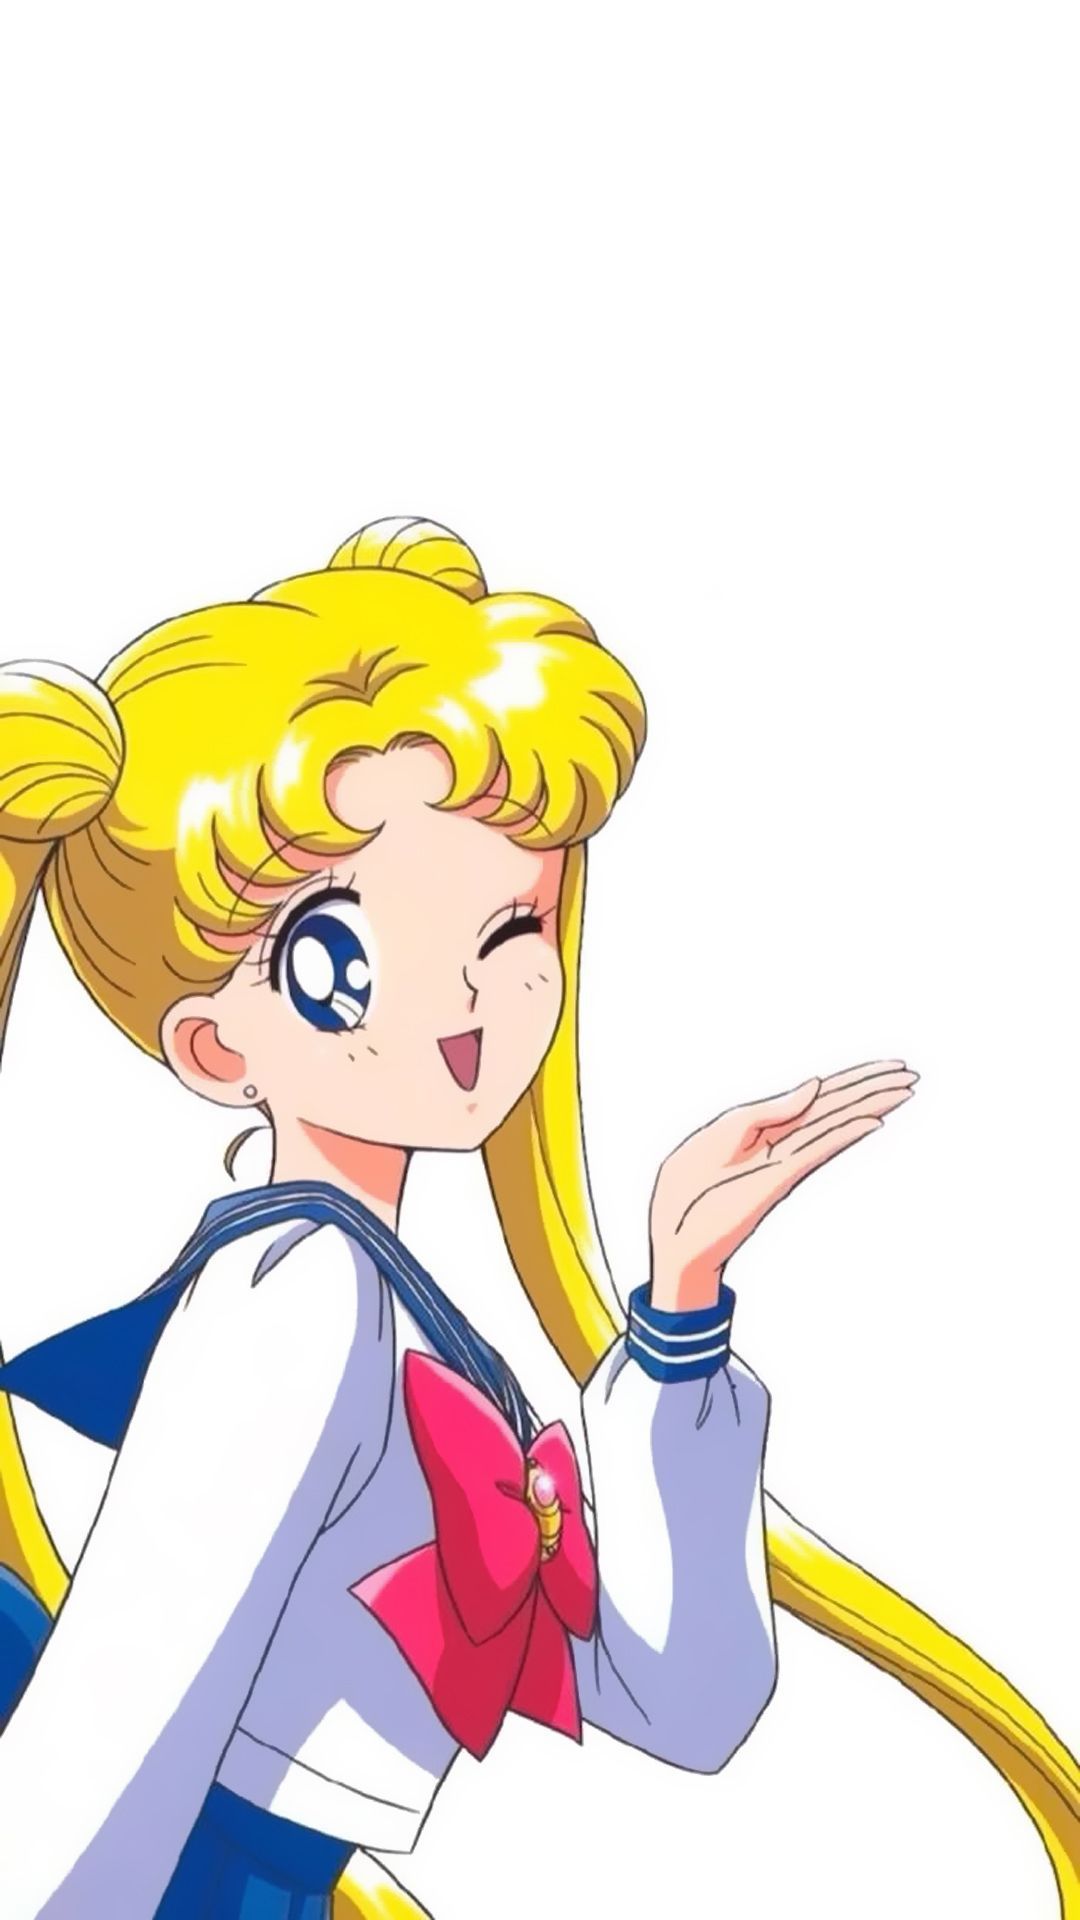 Sailor moon. Sailor moon wallpaper, Sailor moon usagi, Sailor moon manga